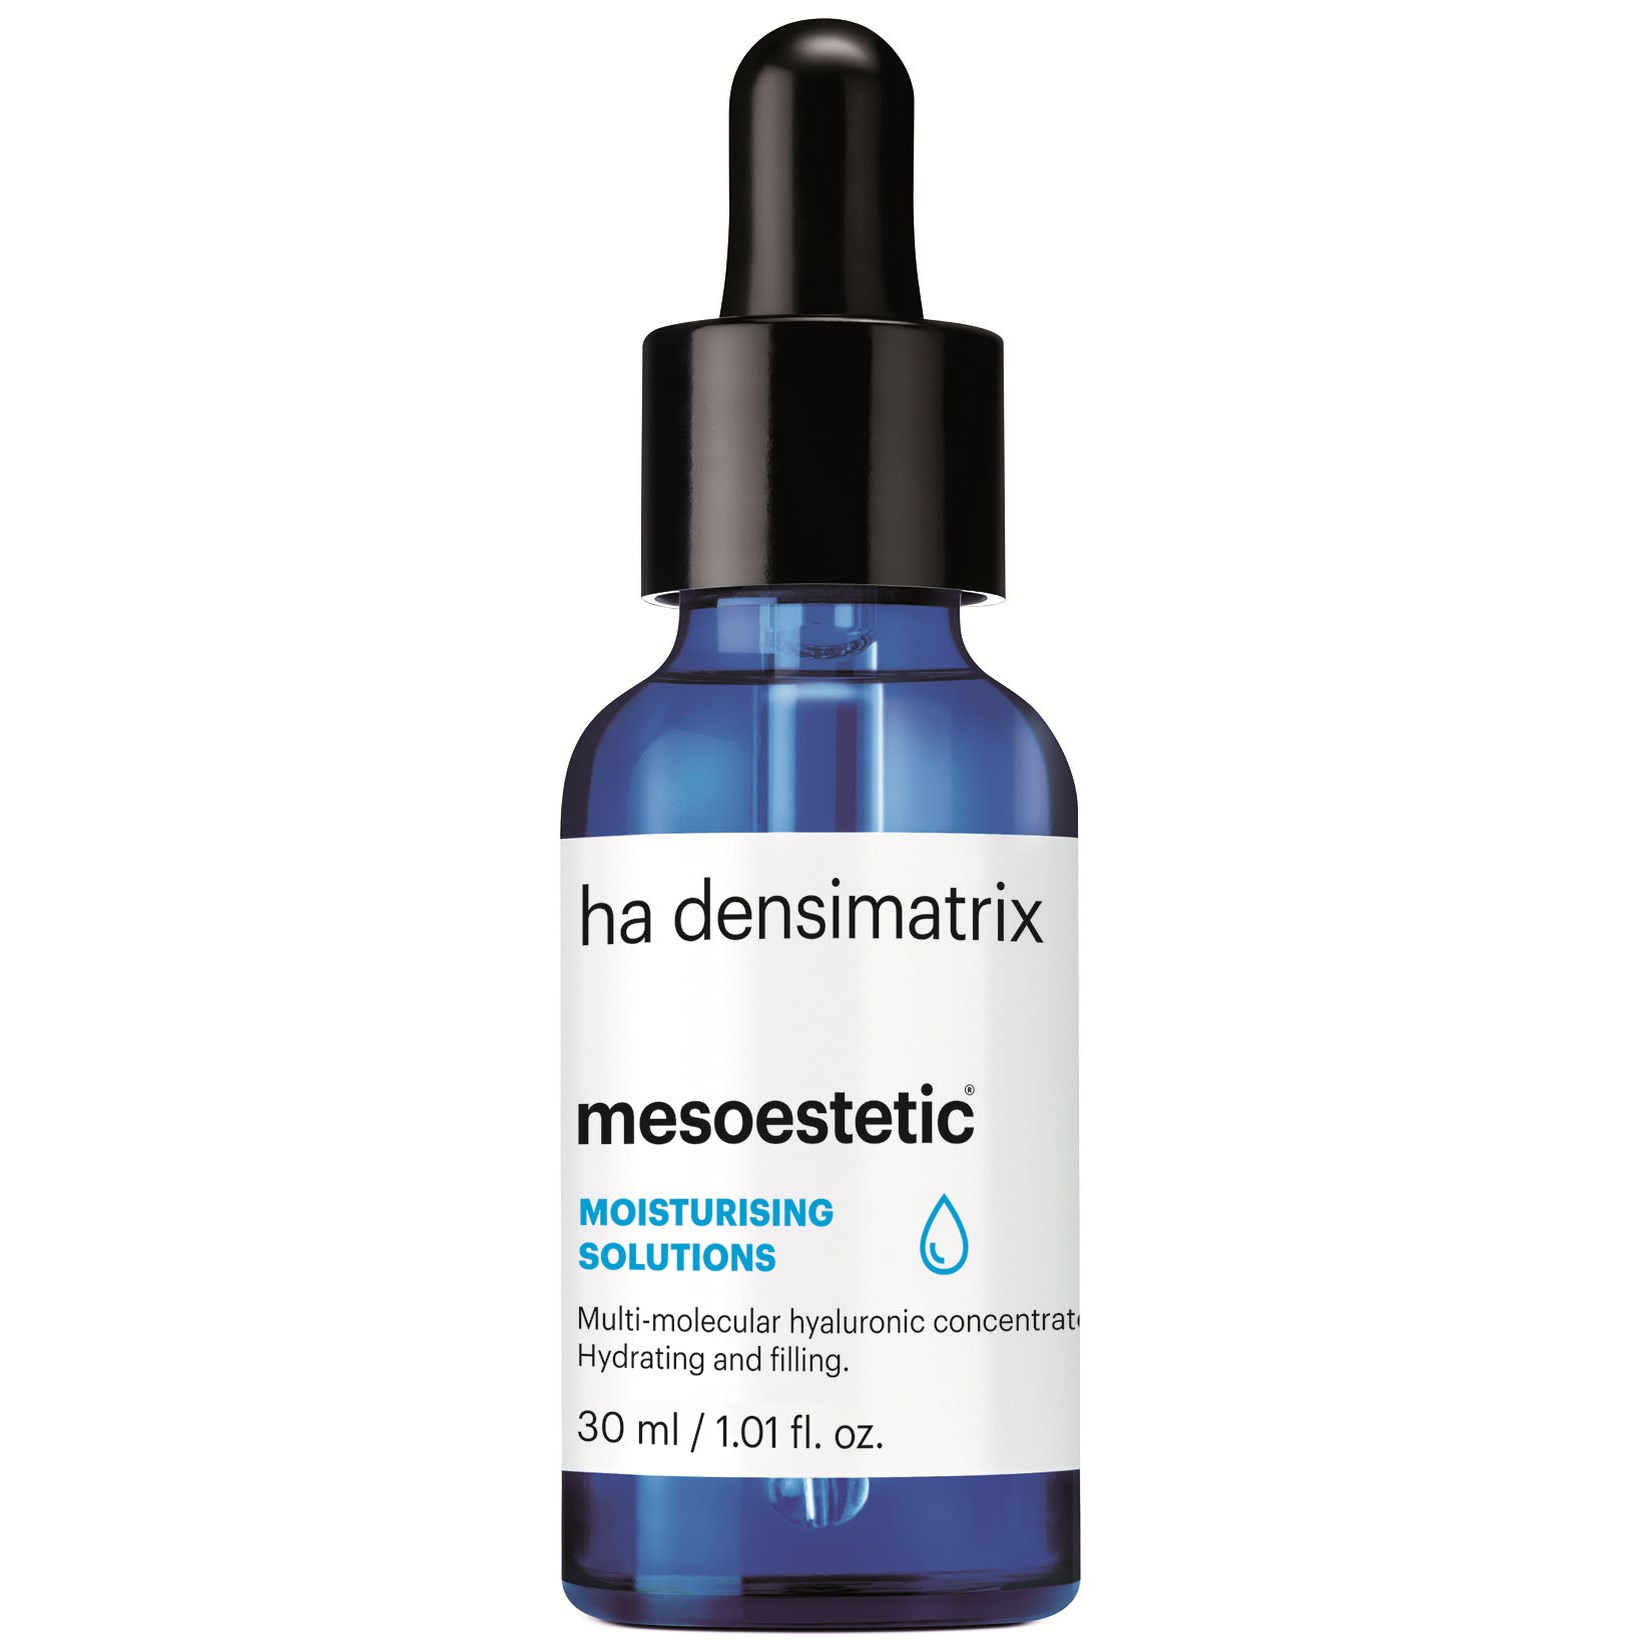 Mesoestetic Moistursing solutions ha densimatrix 30 ml